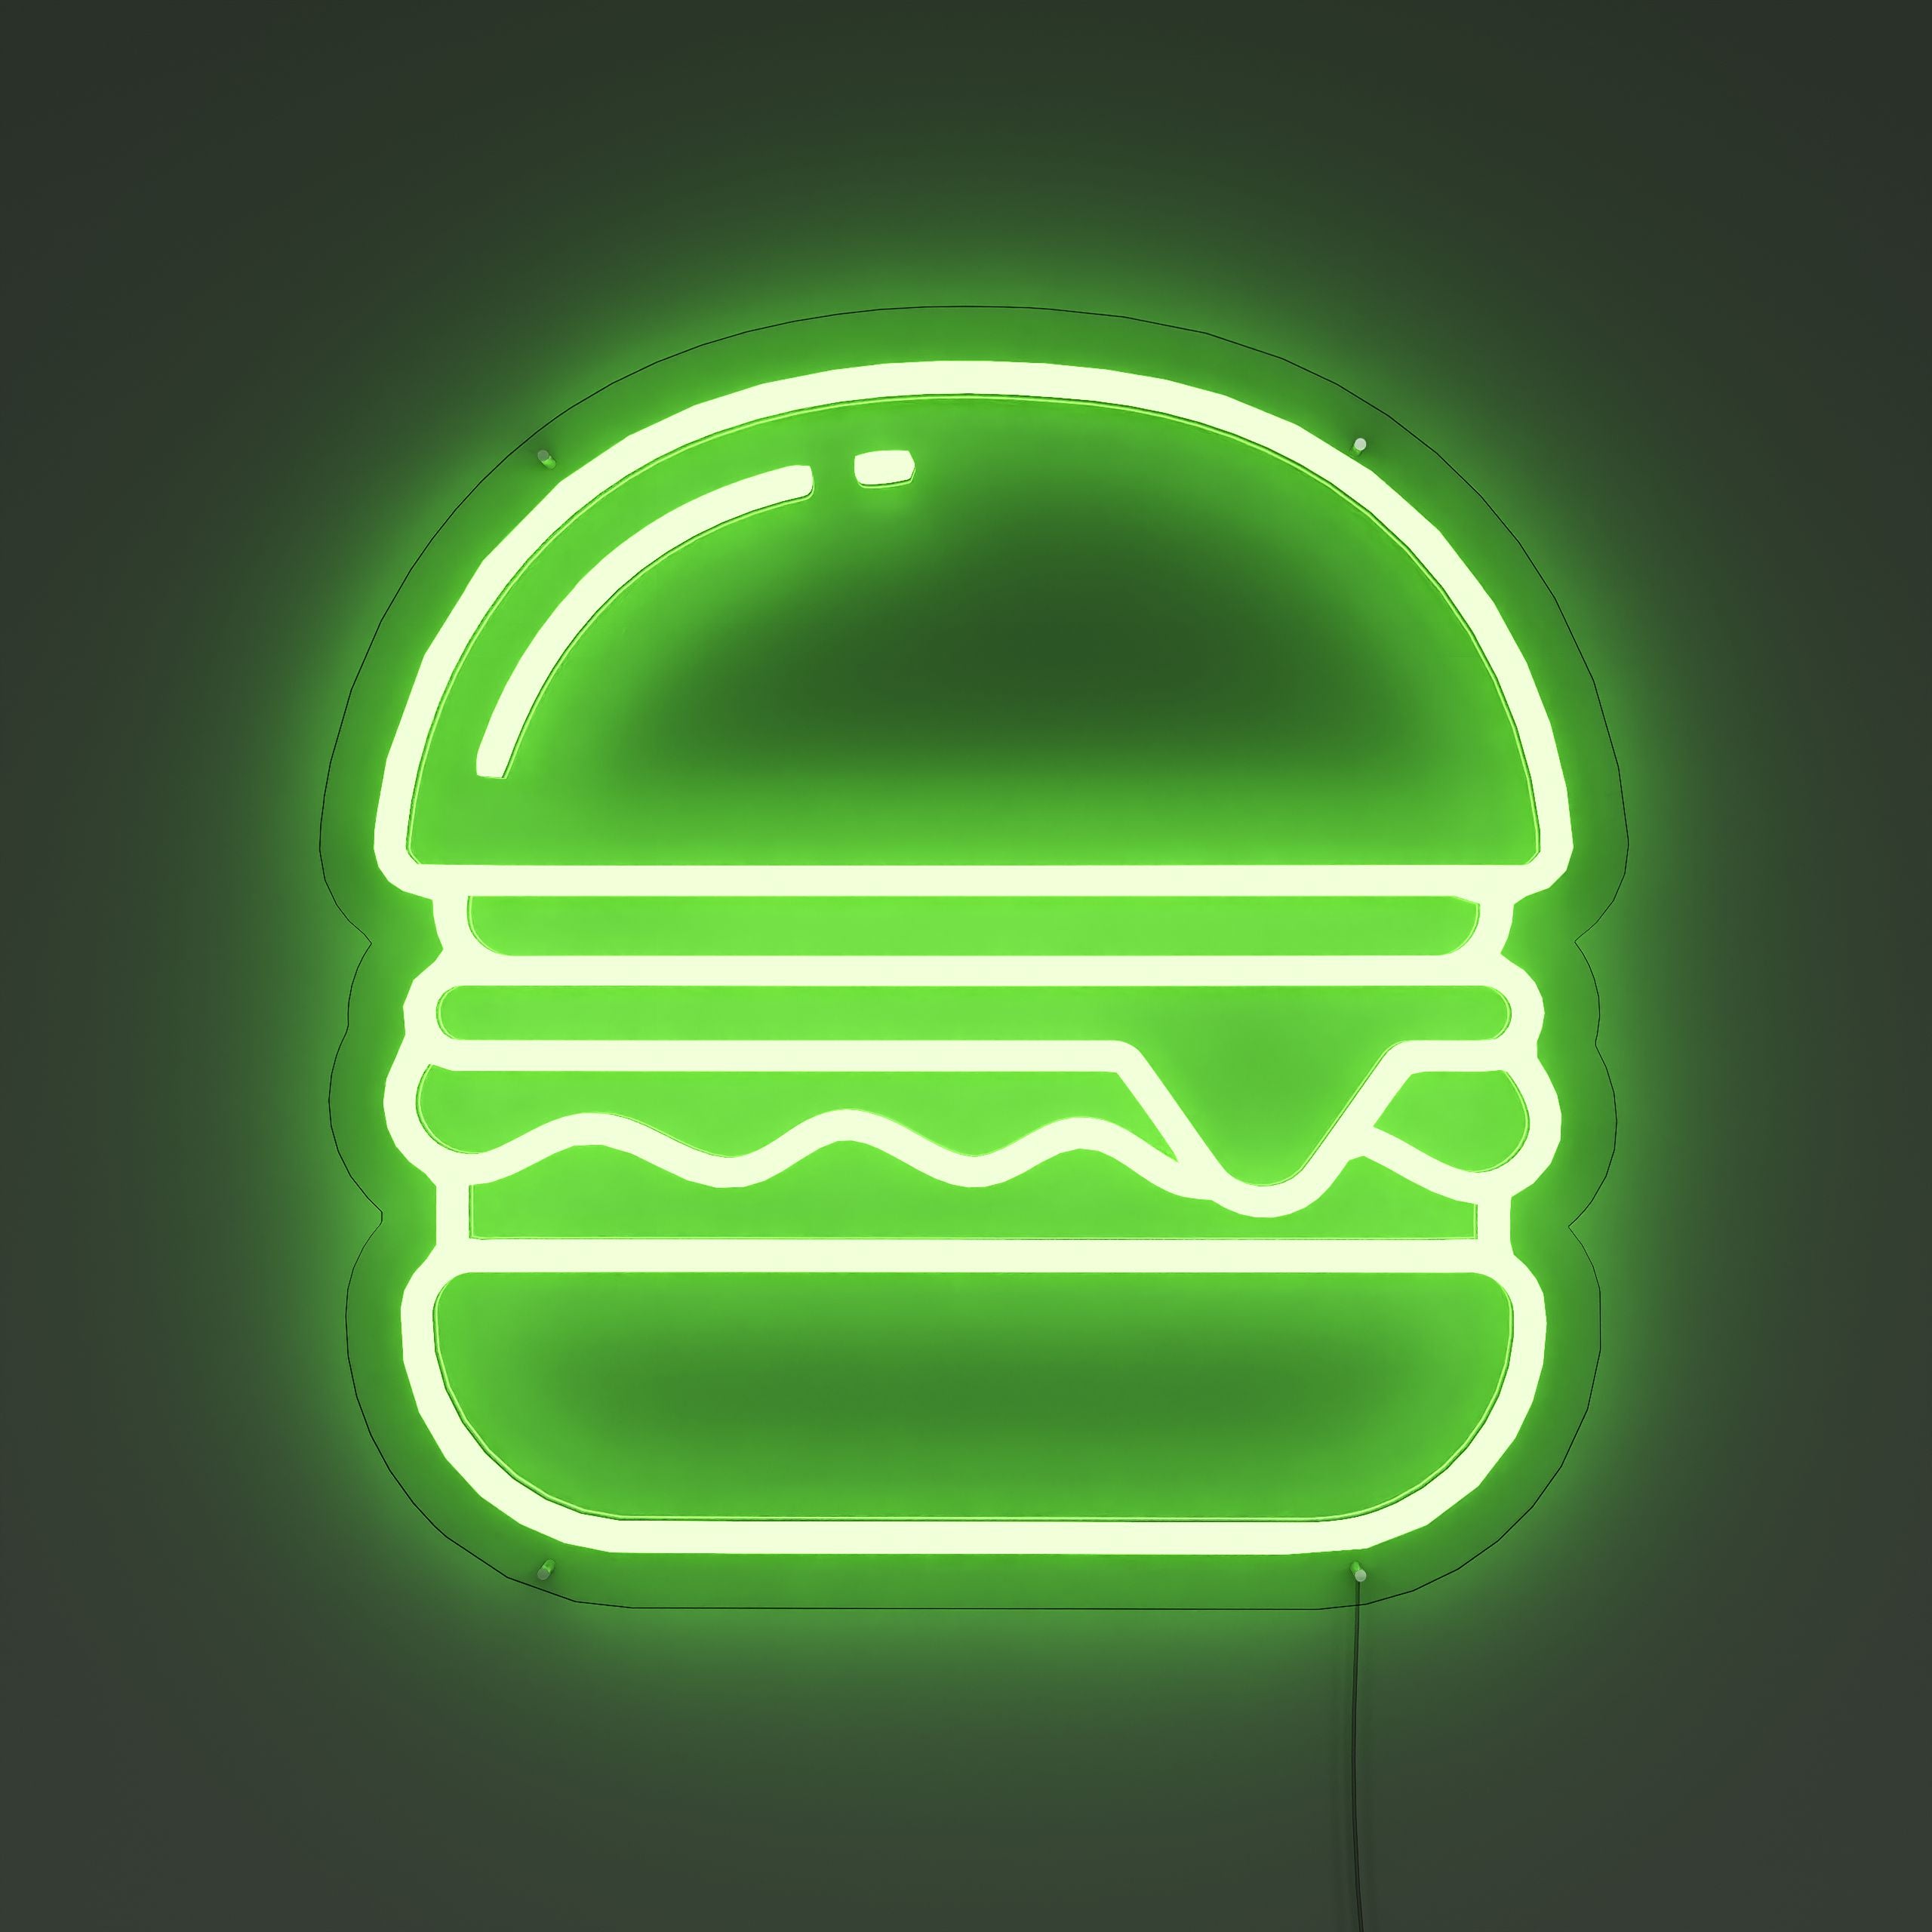 Tasty-Burger-Bites-Neon-Sign-Lite